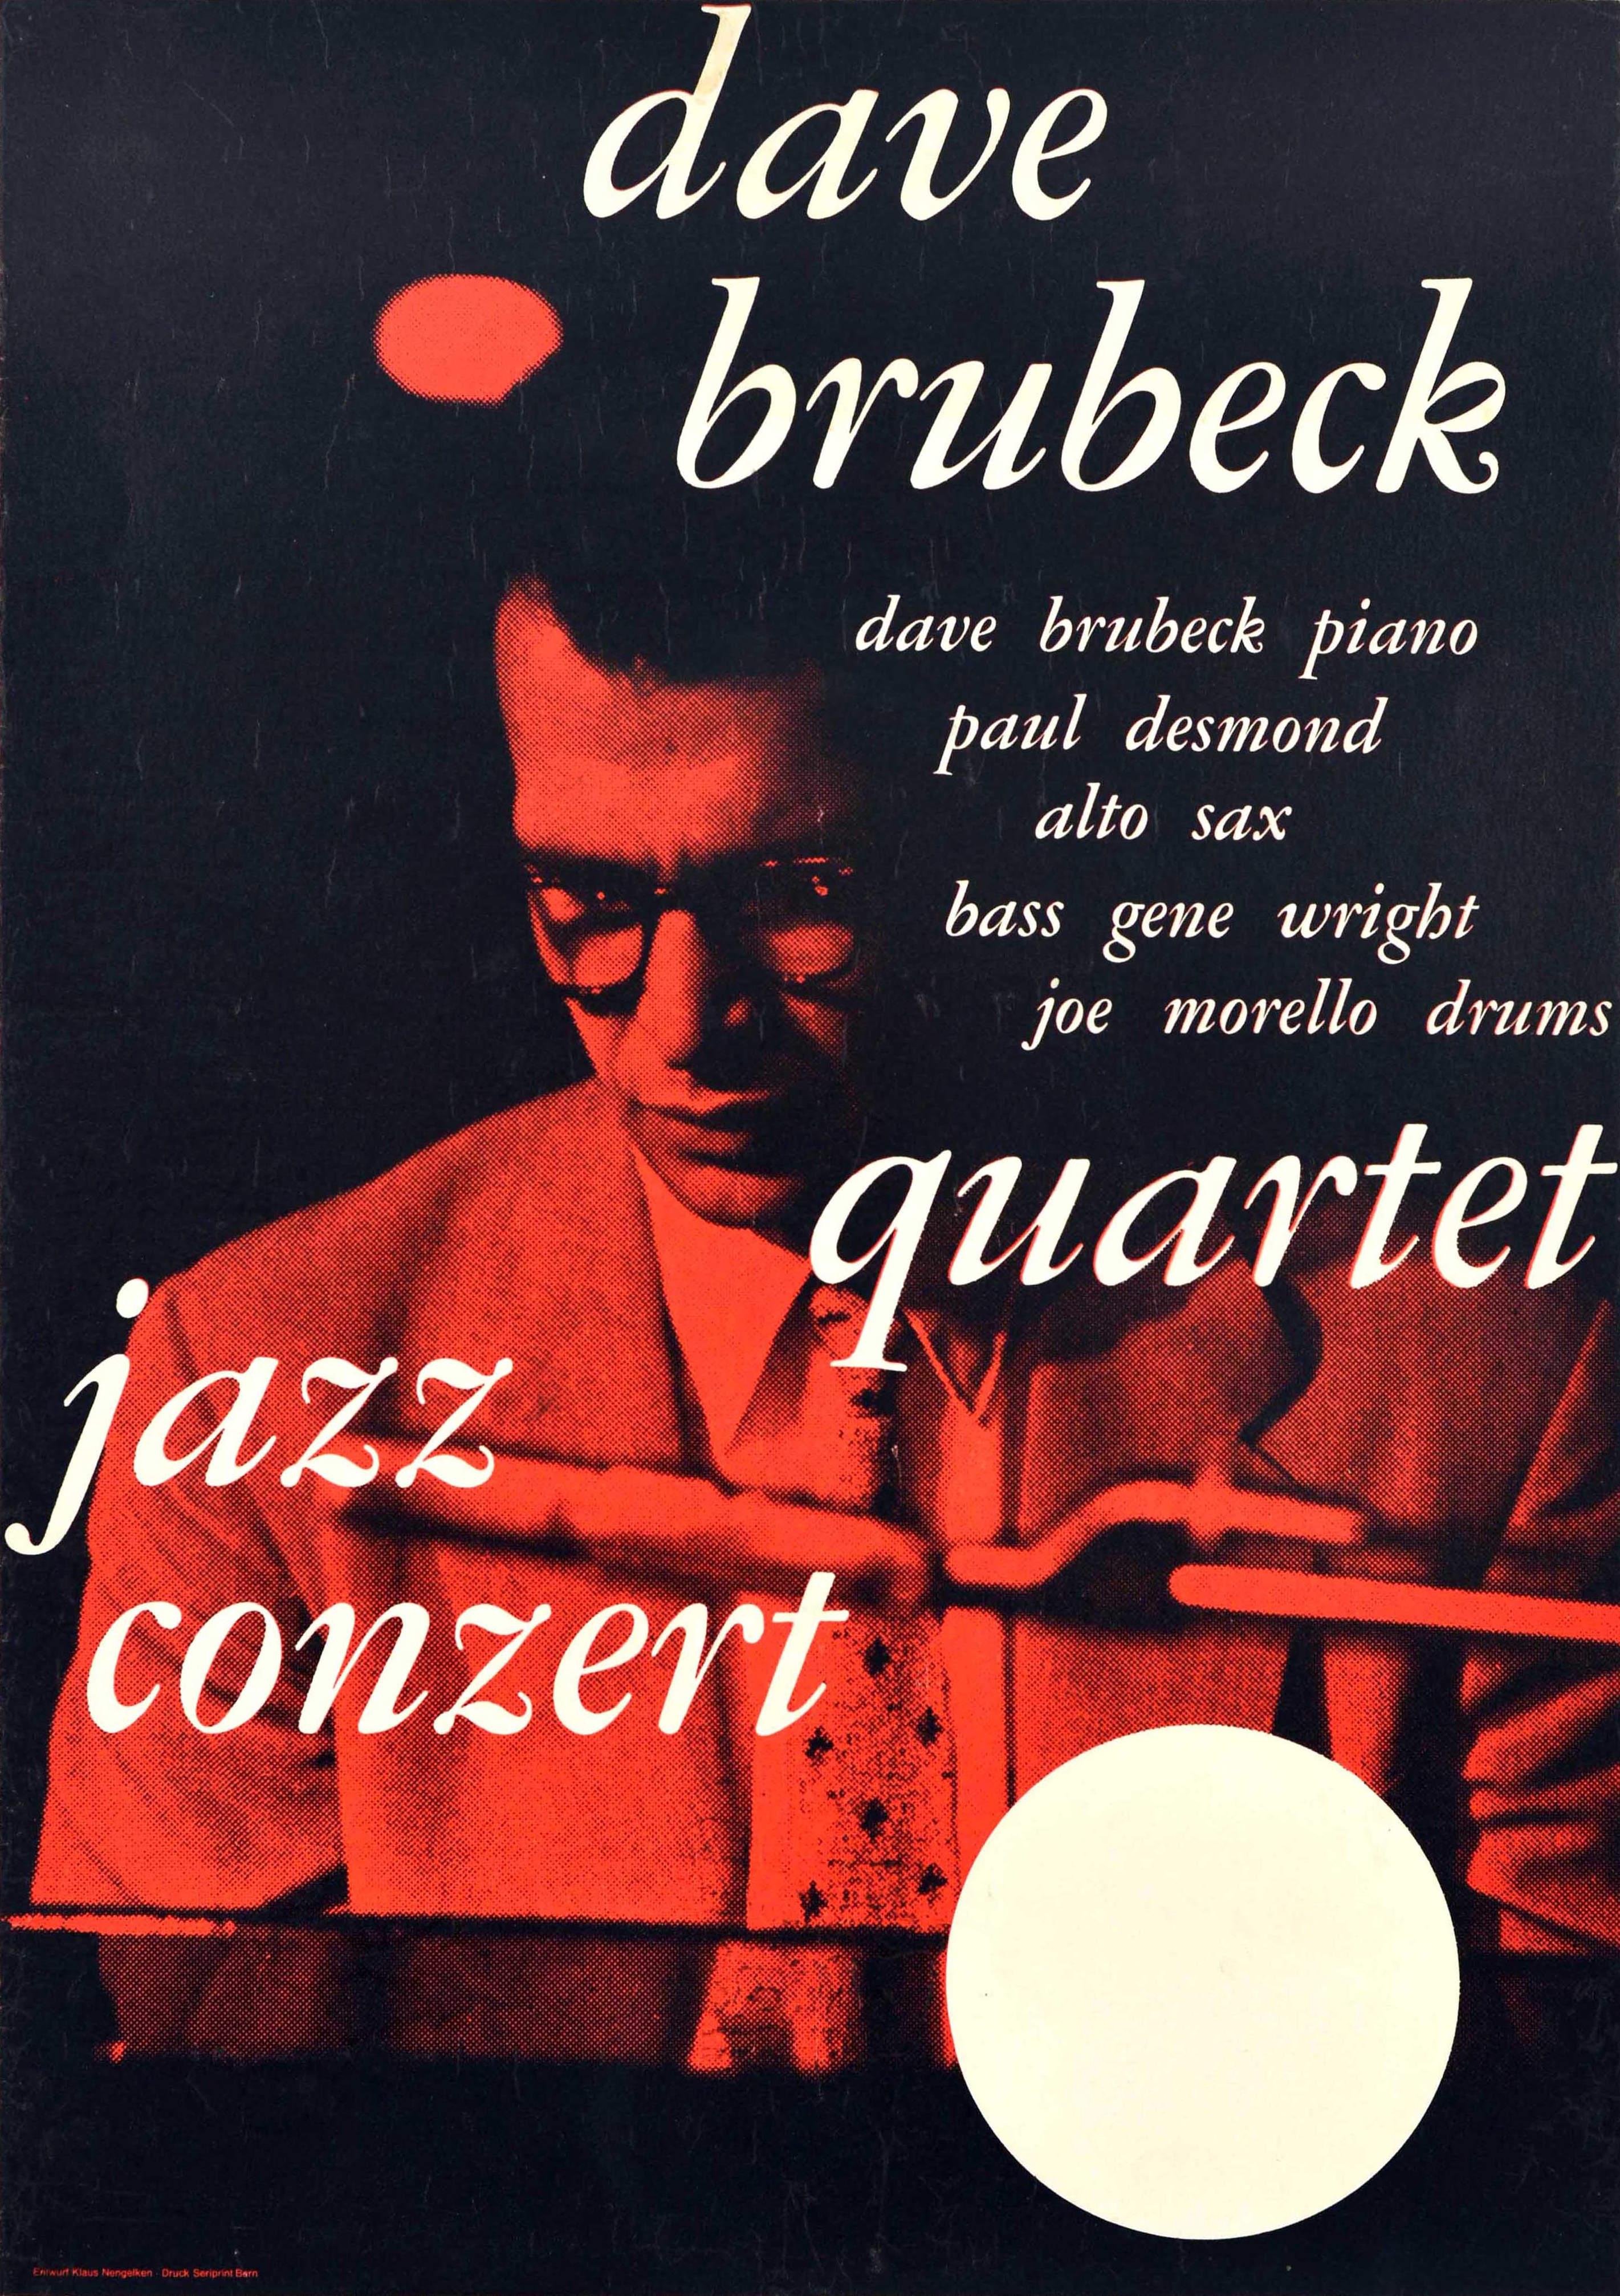 Unknown Print - Original Vintage Advertising Poster Dave Brubeck Quartet Jazz Music Concert